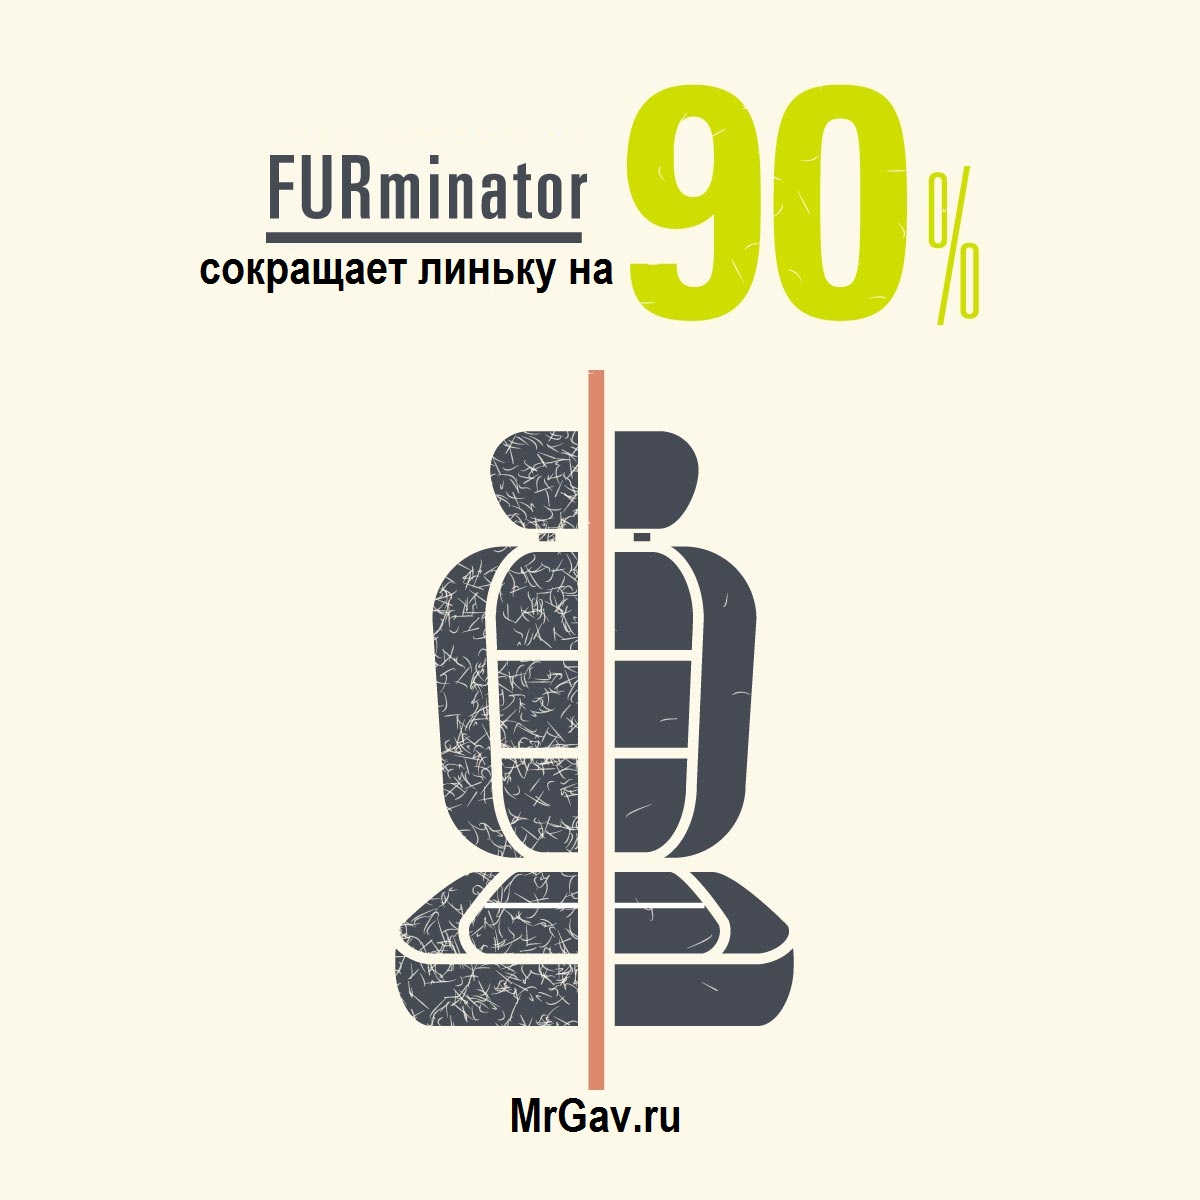 Эффект фурминатора на примере кресла